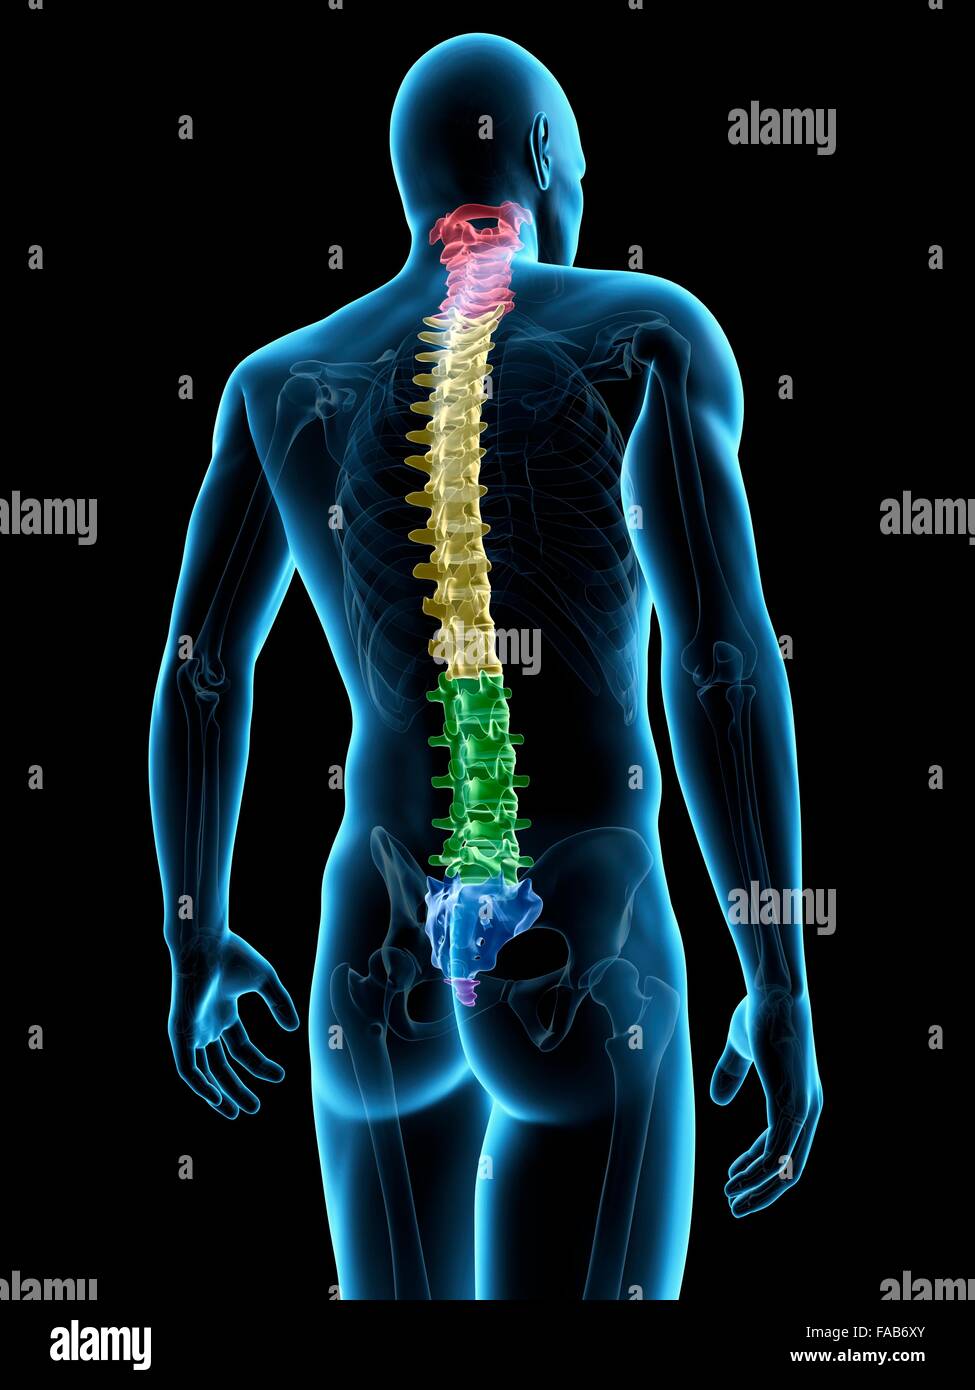 Human spine, computer illustration. Stock Photo